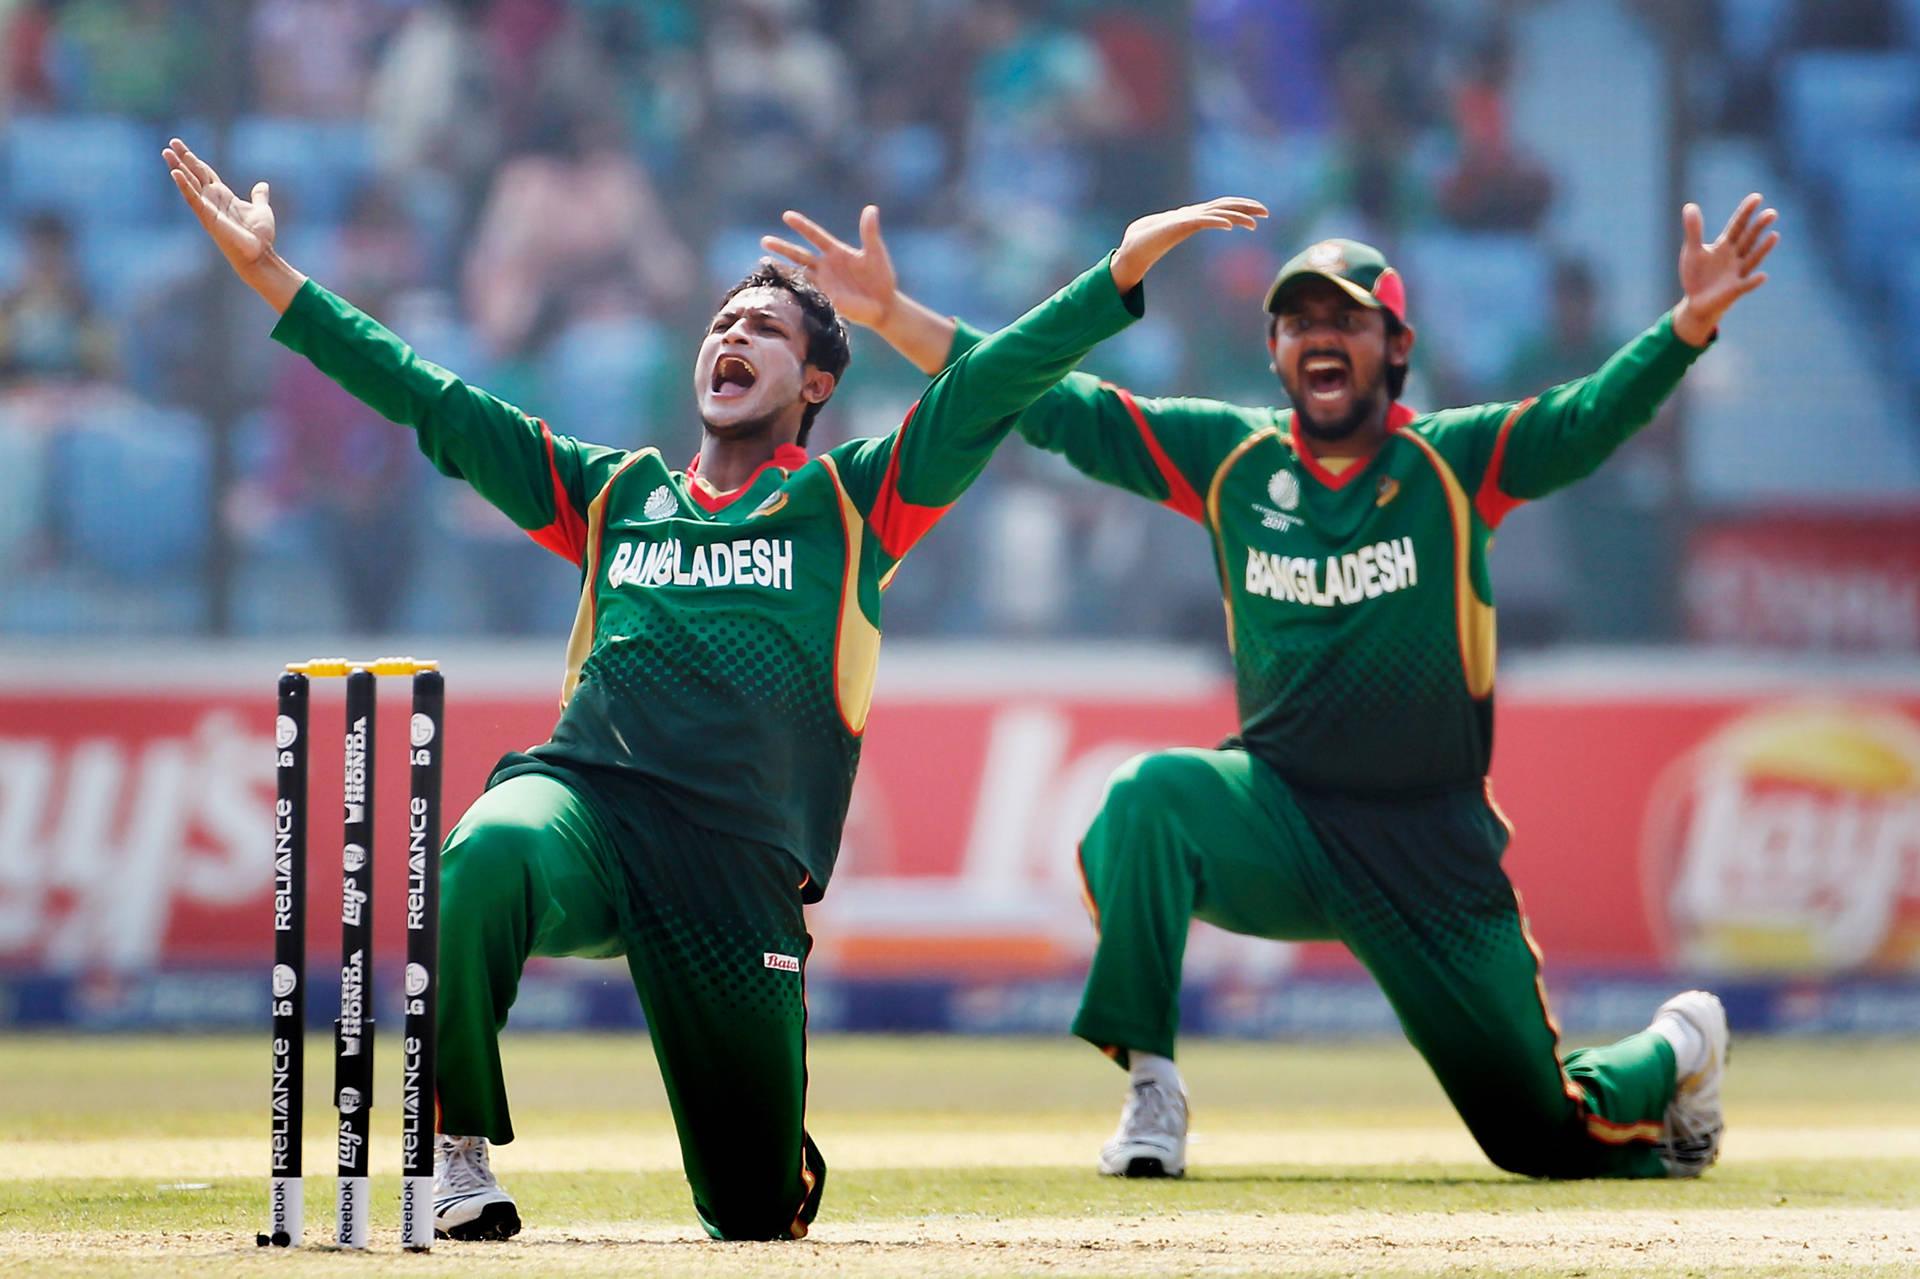 Jugadoresde Críquet De Bangladesh Arrodillándose. Fondo de pantalla